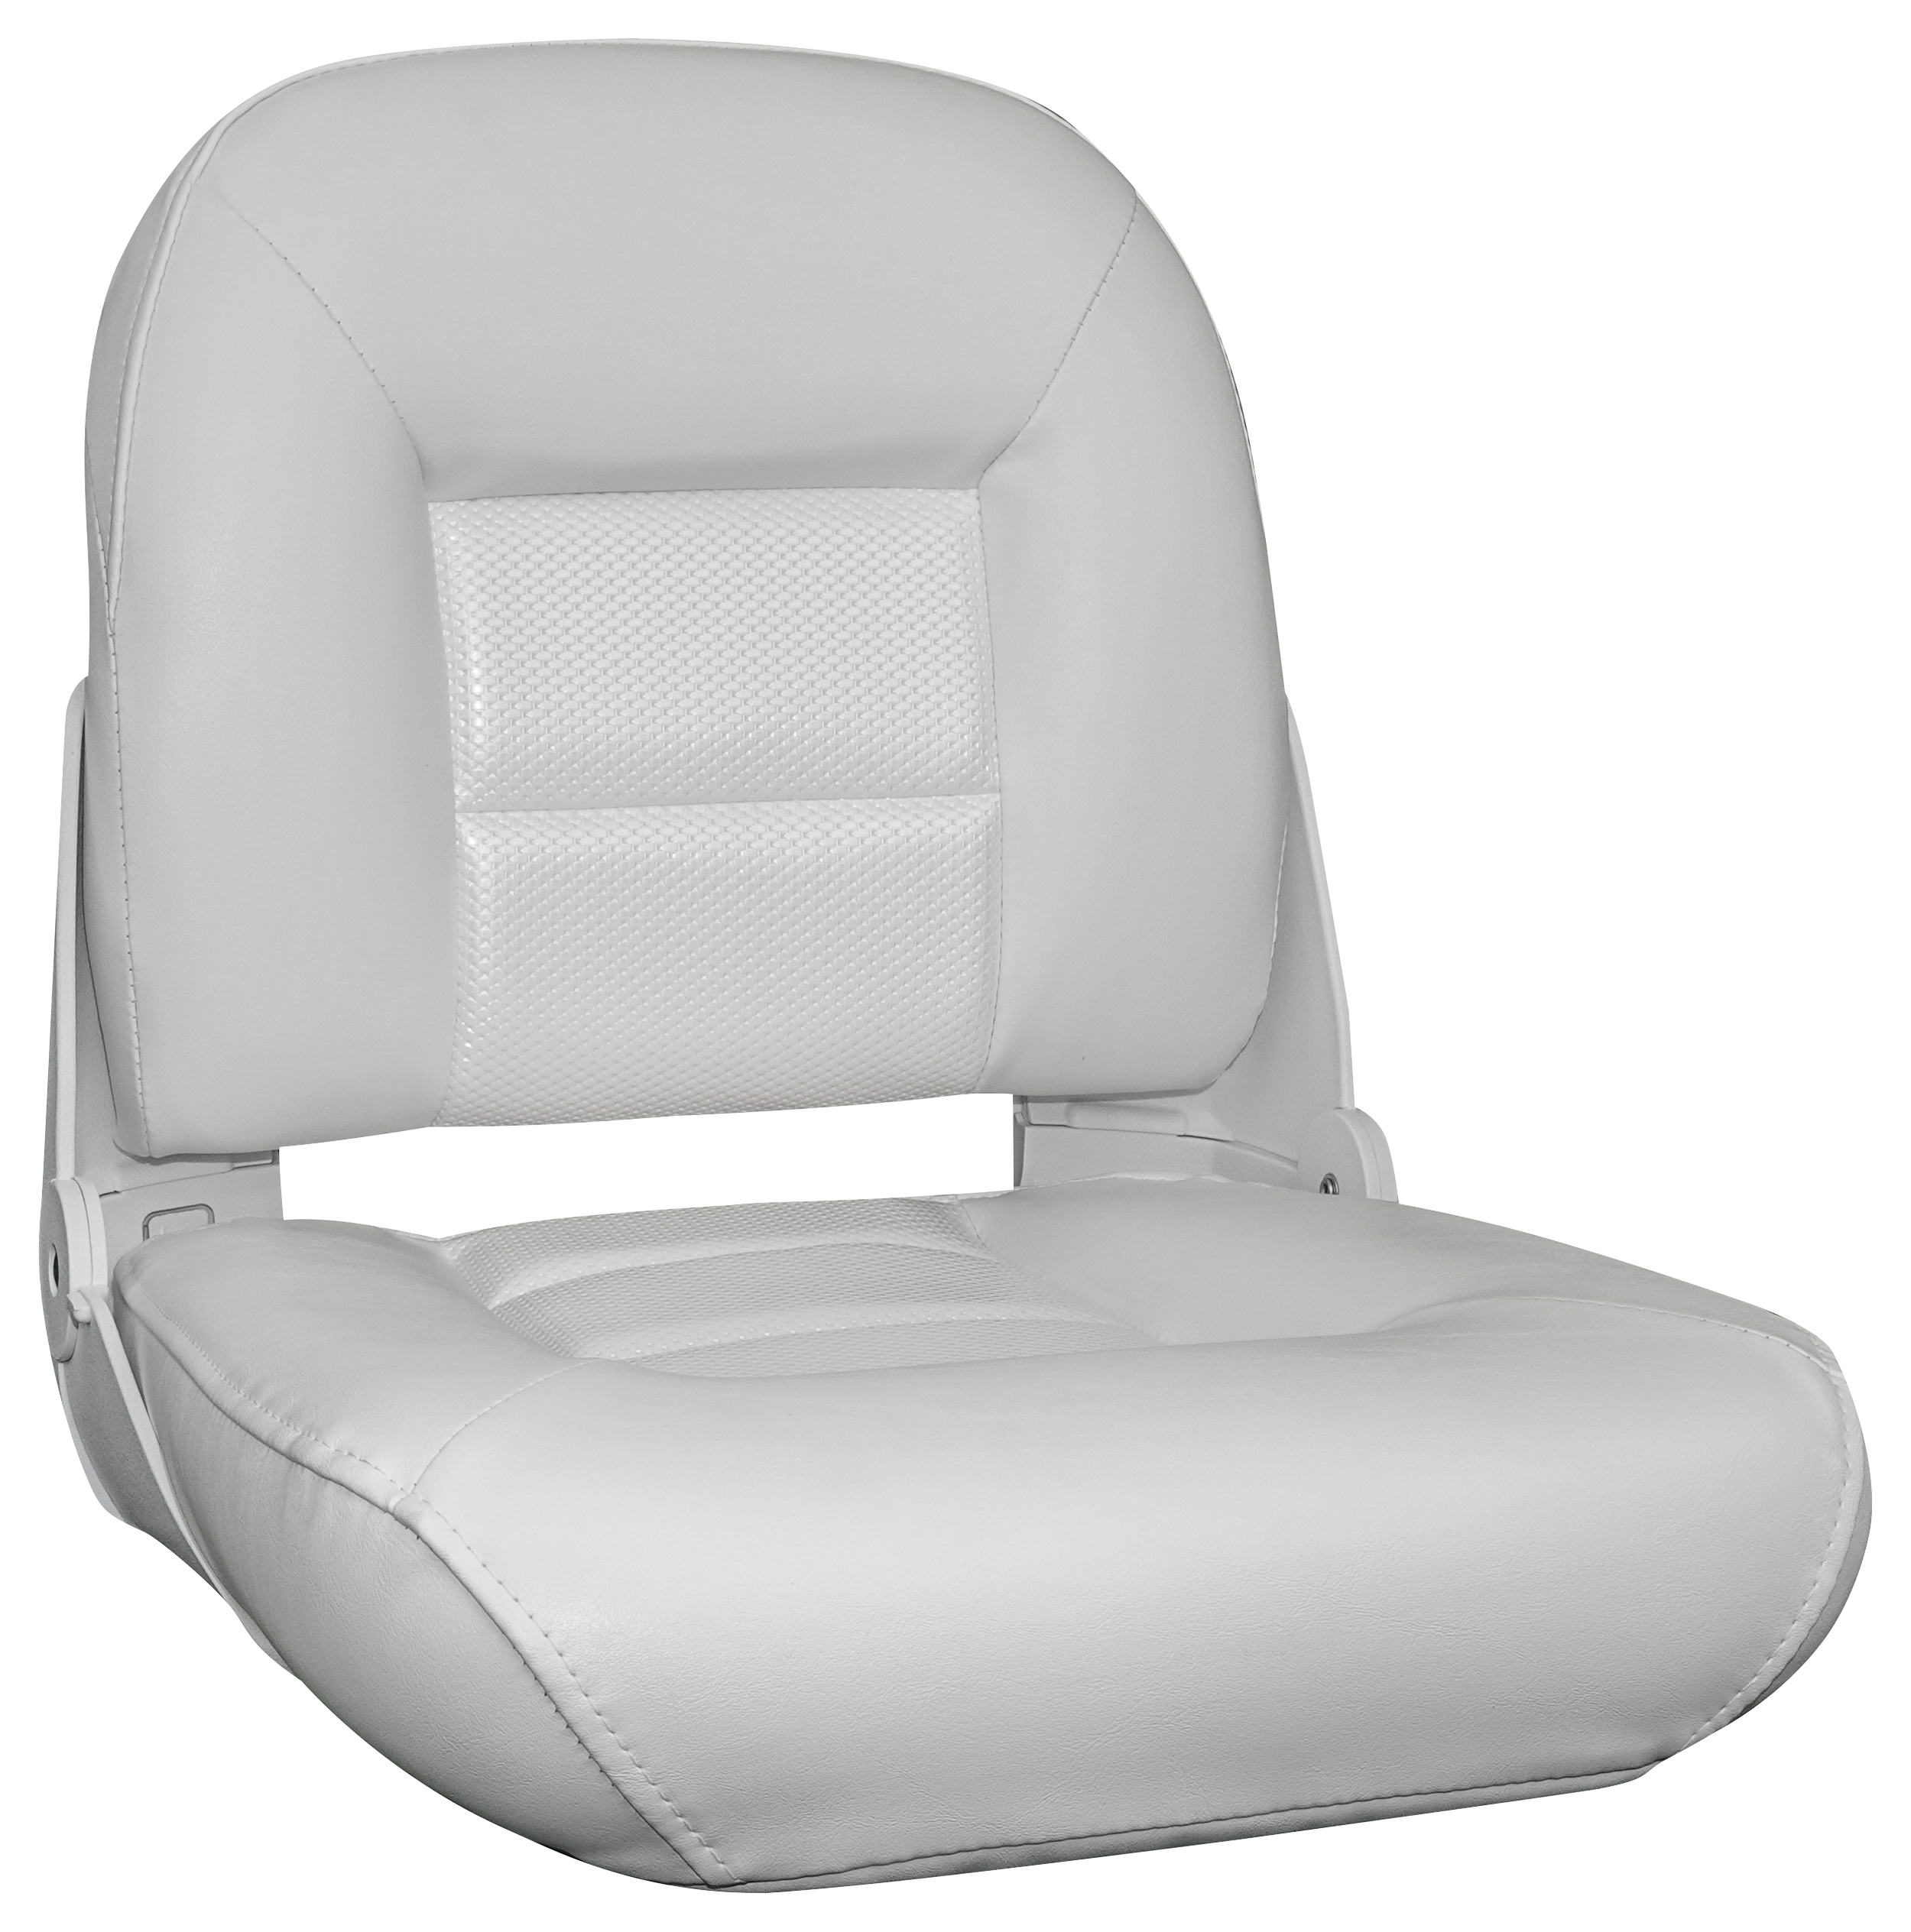 Pelican Sport Ergo360 Boat Seat with Swivel